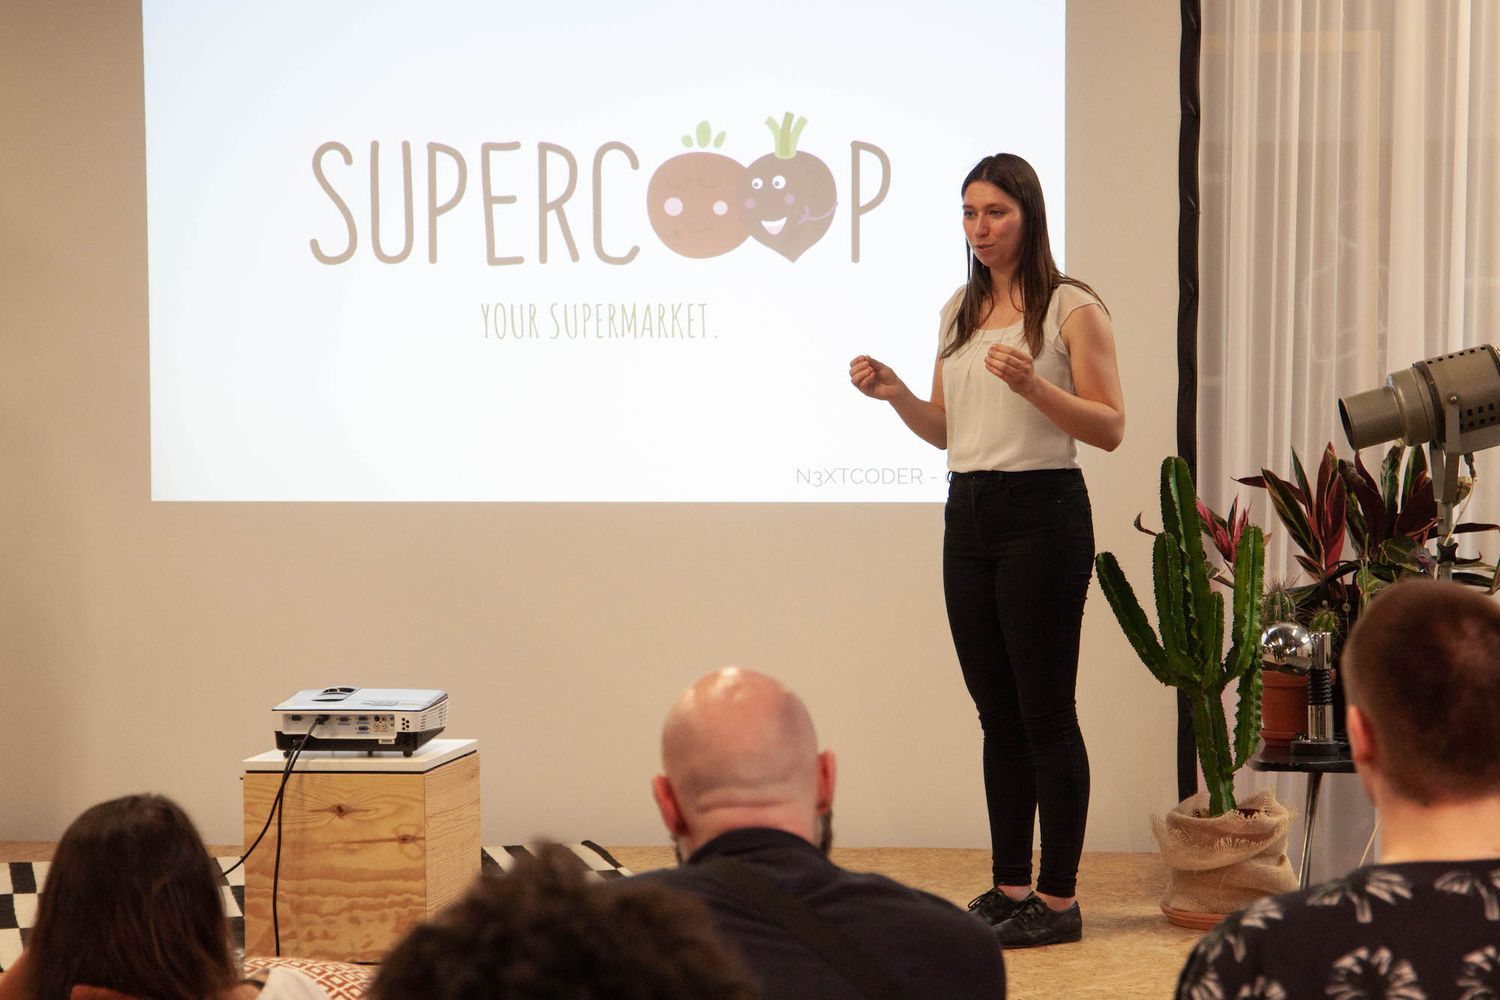 Supercoop presenting their startup